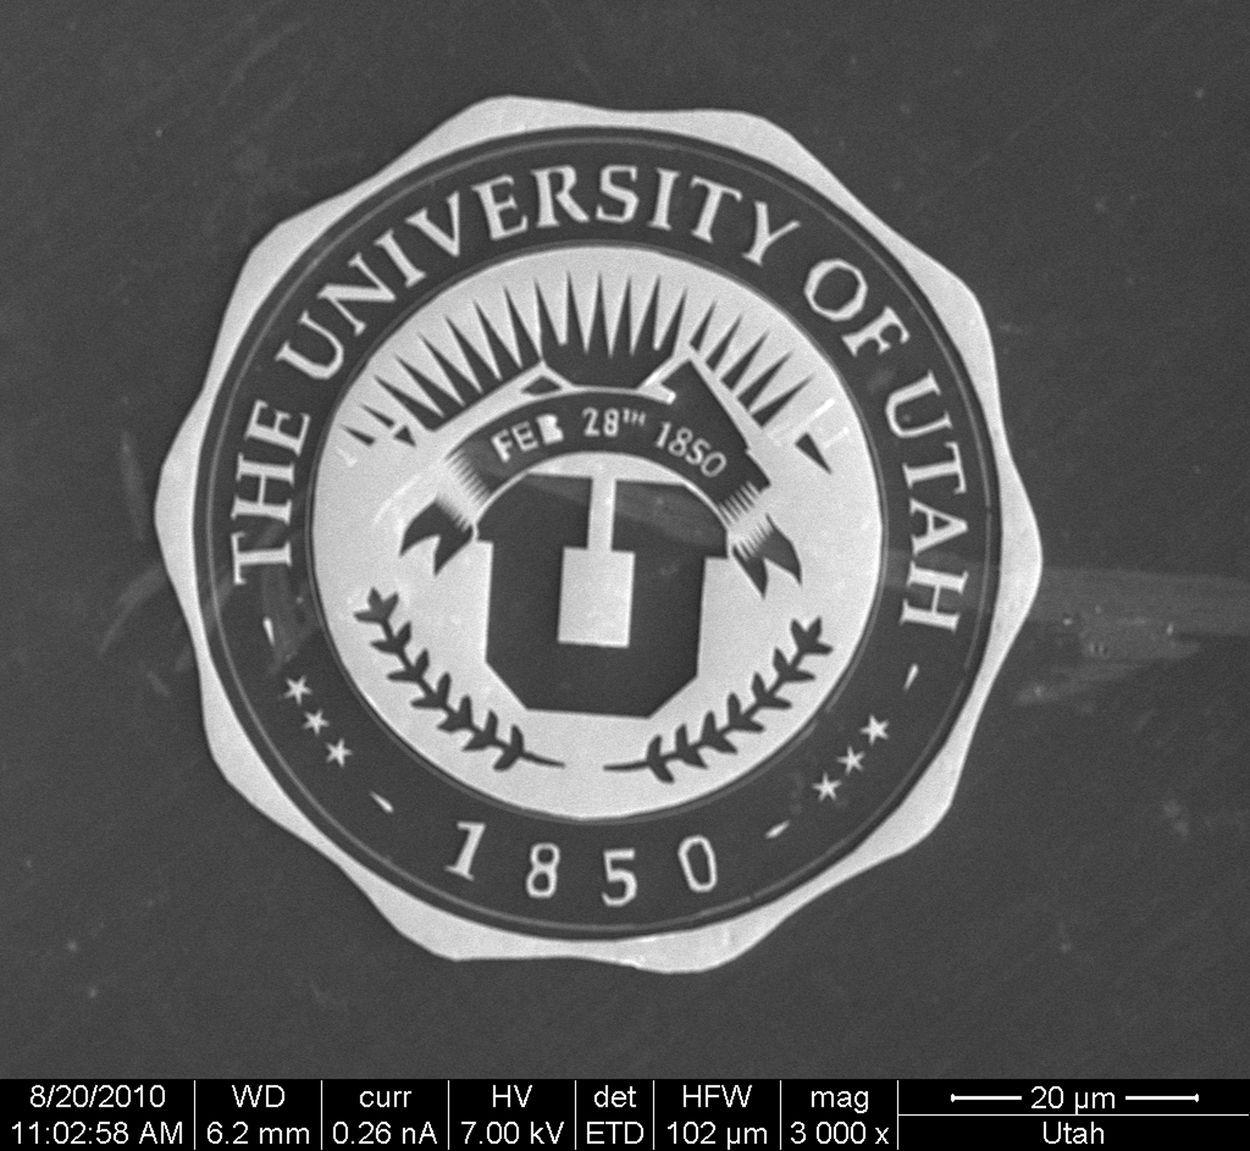 Better U Logo - Engineer shrinks 'U' logo